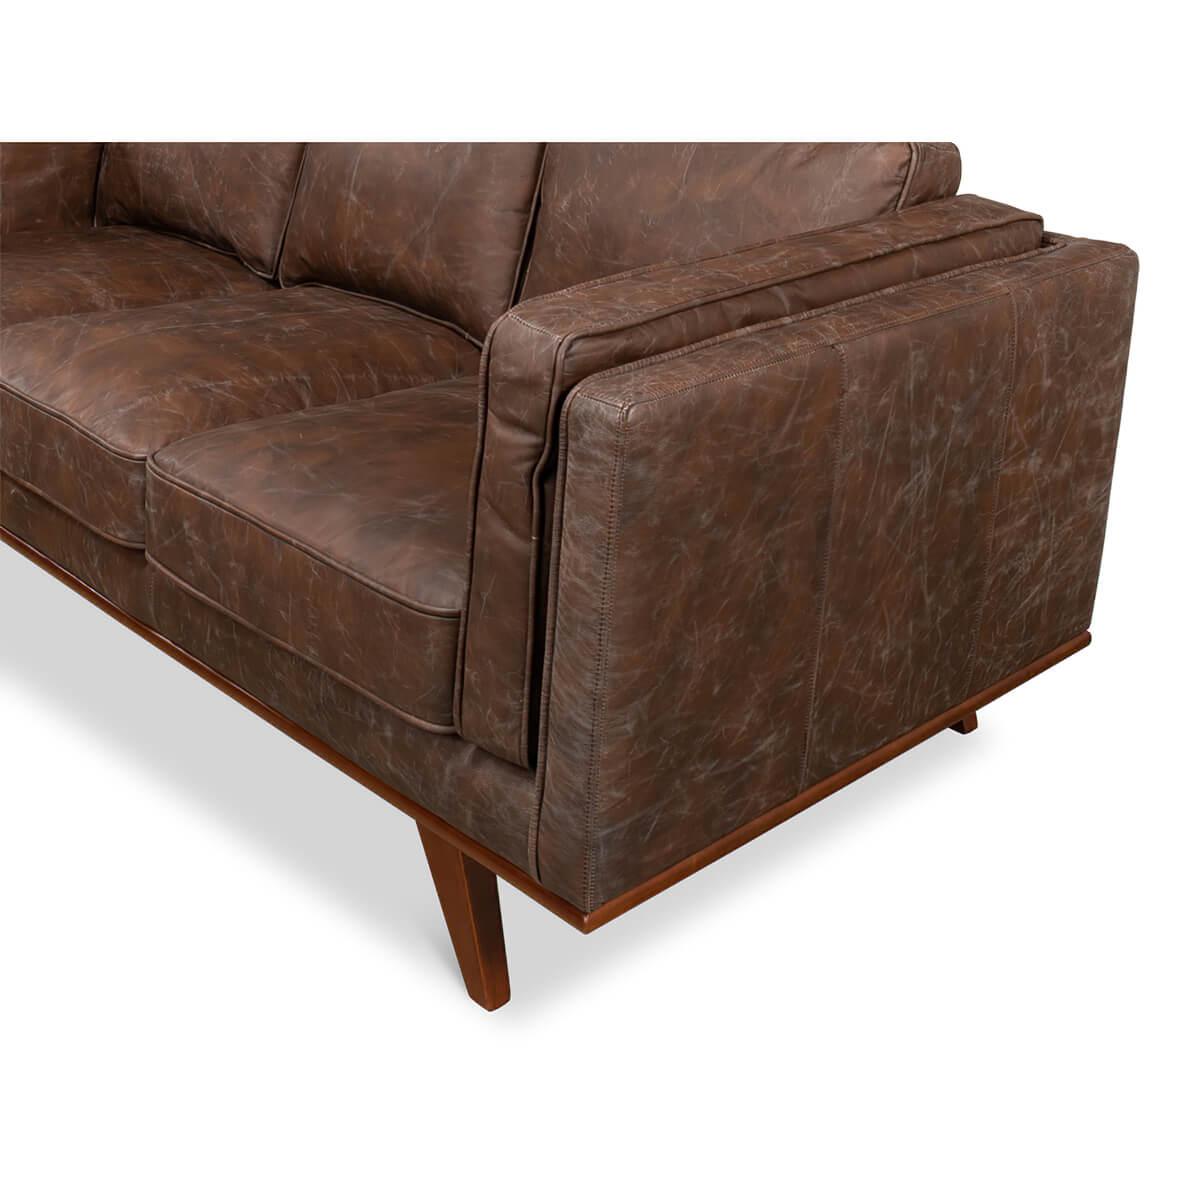 Asian European Mid Century Style Leather Sofa